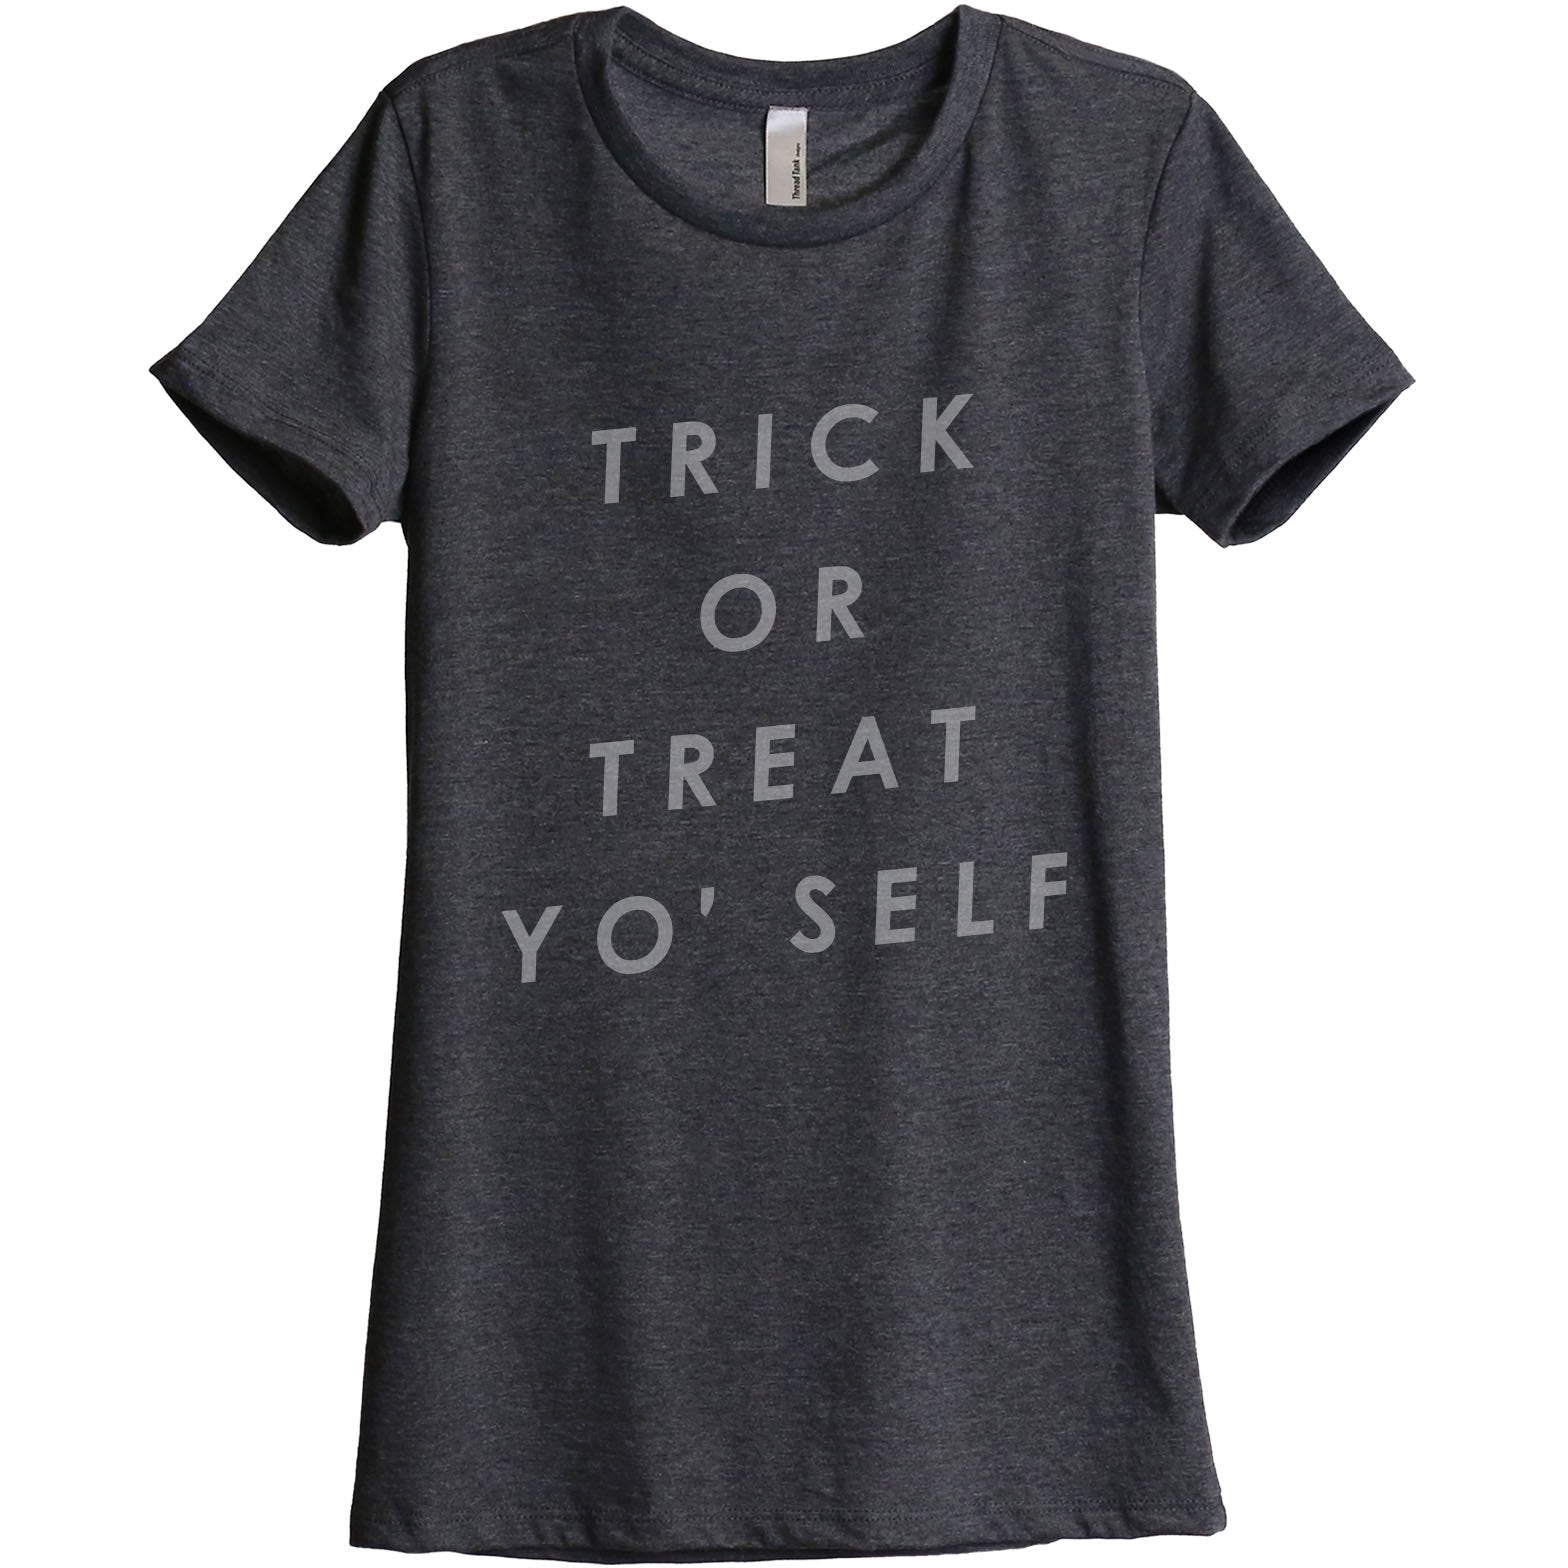 Trick Or Treat Yo Self - thread tank | Stories you can wear.